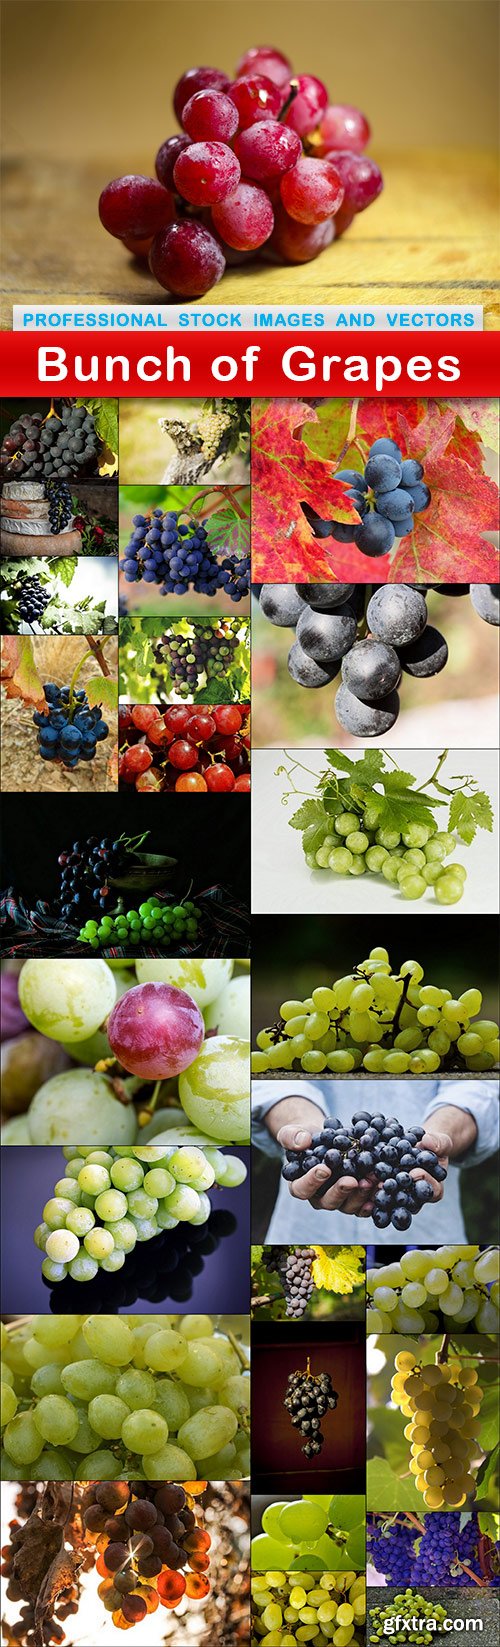 Bunch of Grapes - 27 UHQ JPEG